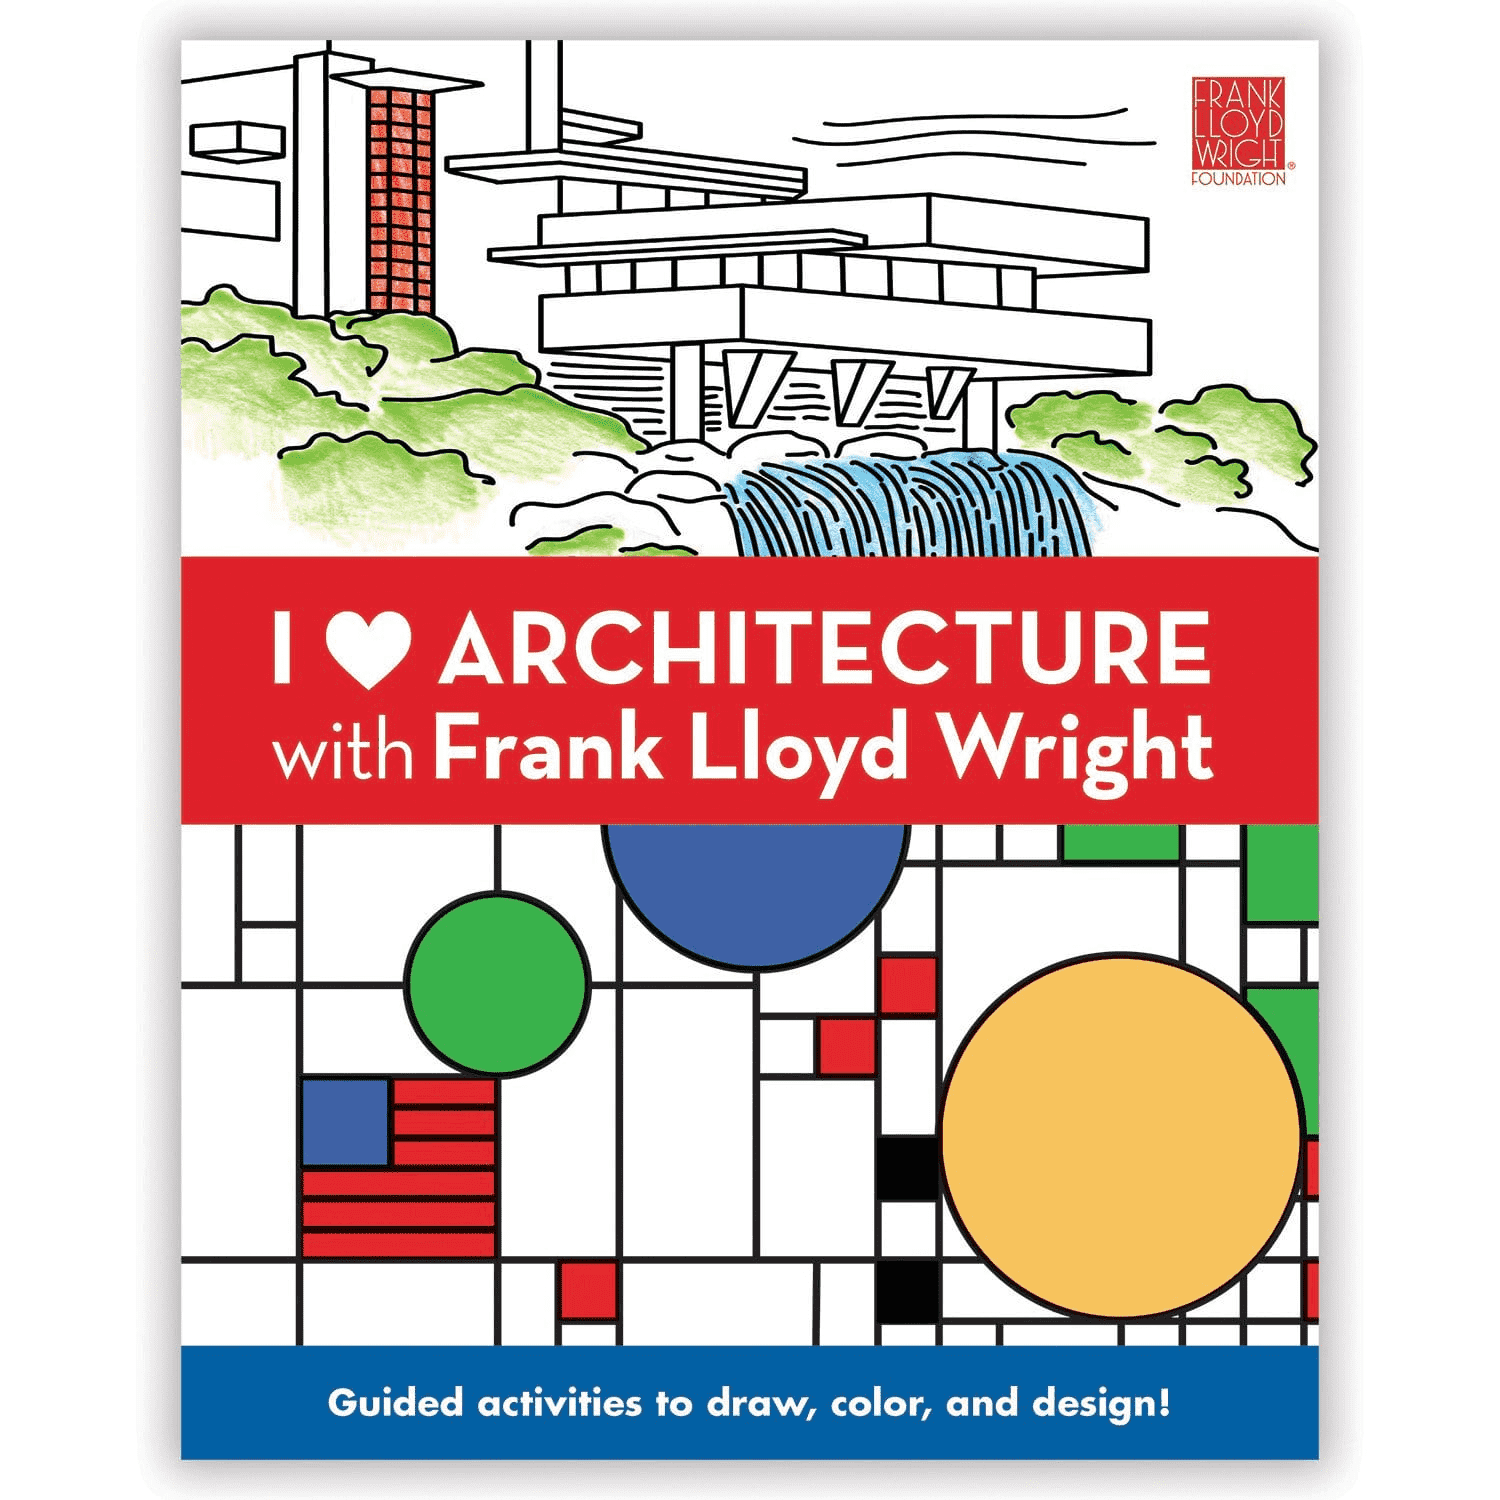 Frank　Lloyd　Wright　Heart　Frank　–　Wright　Foundation　I　with　Architecture　Lloyd